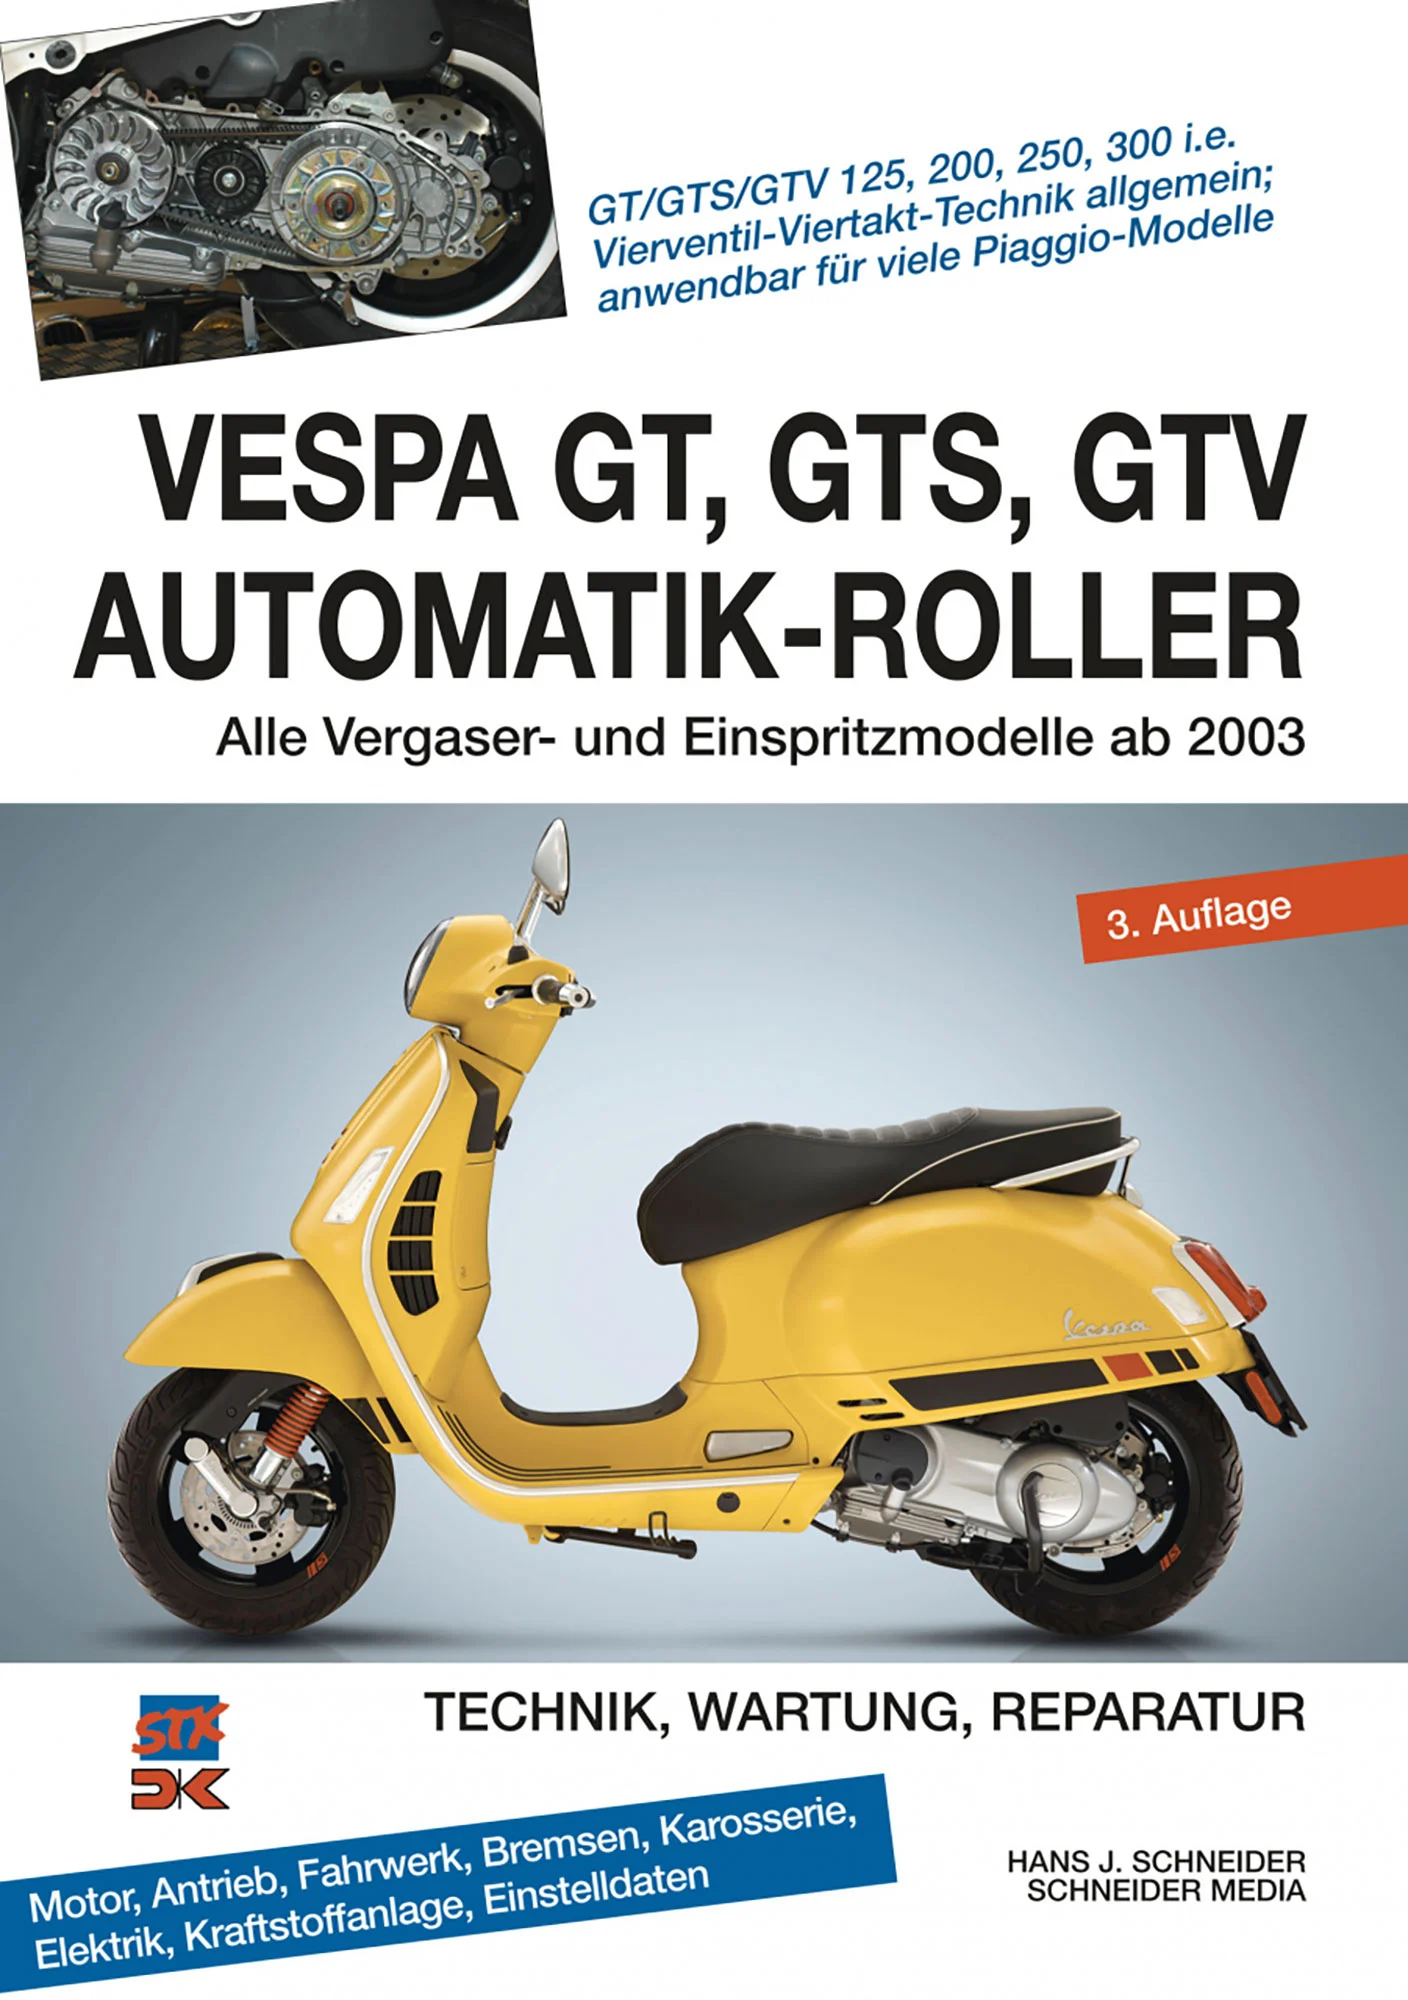 Neue Produkte für Vespa GT, GTS, GTL, GTV - Scooter Center